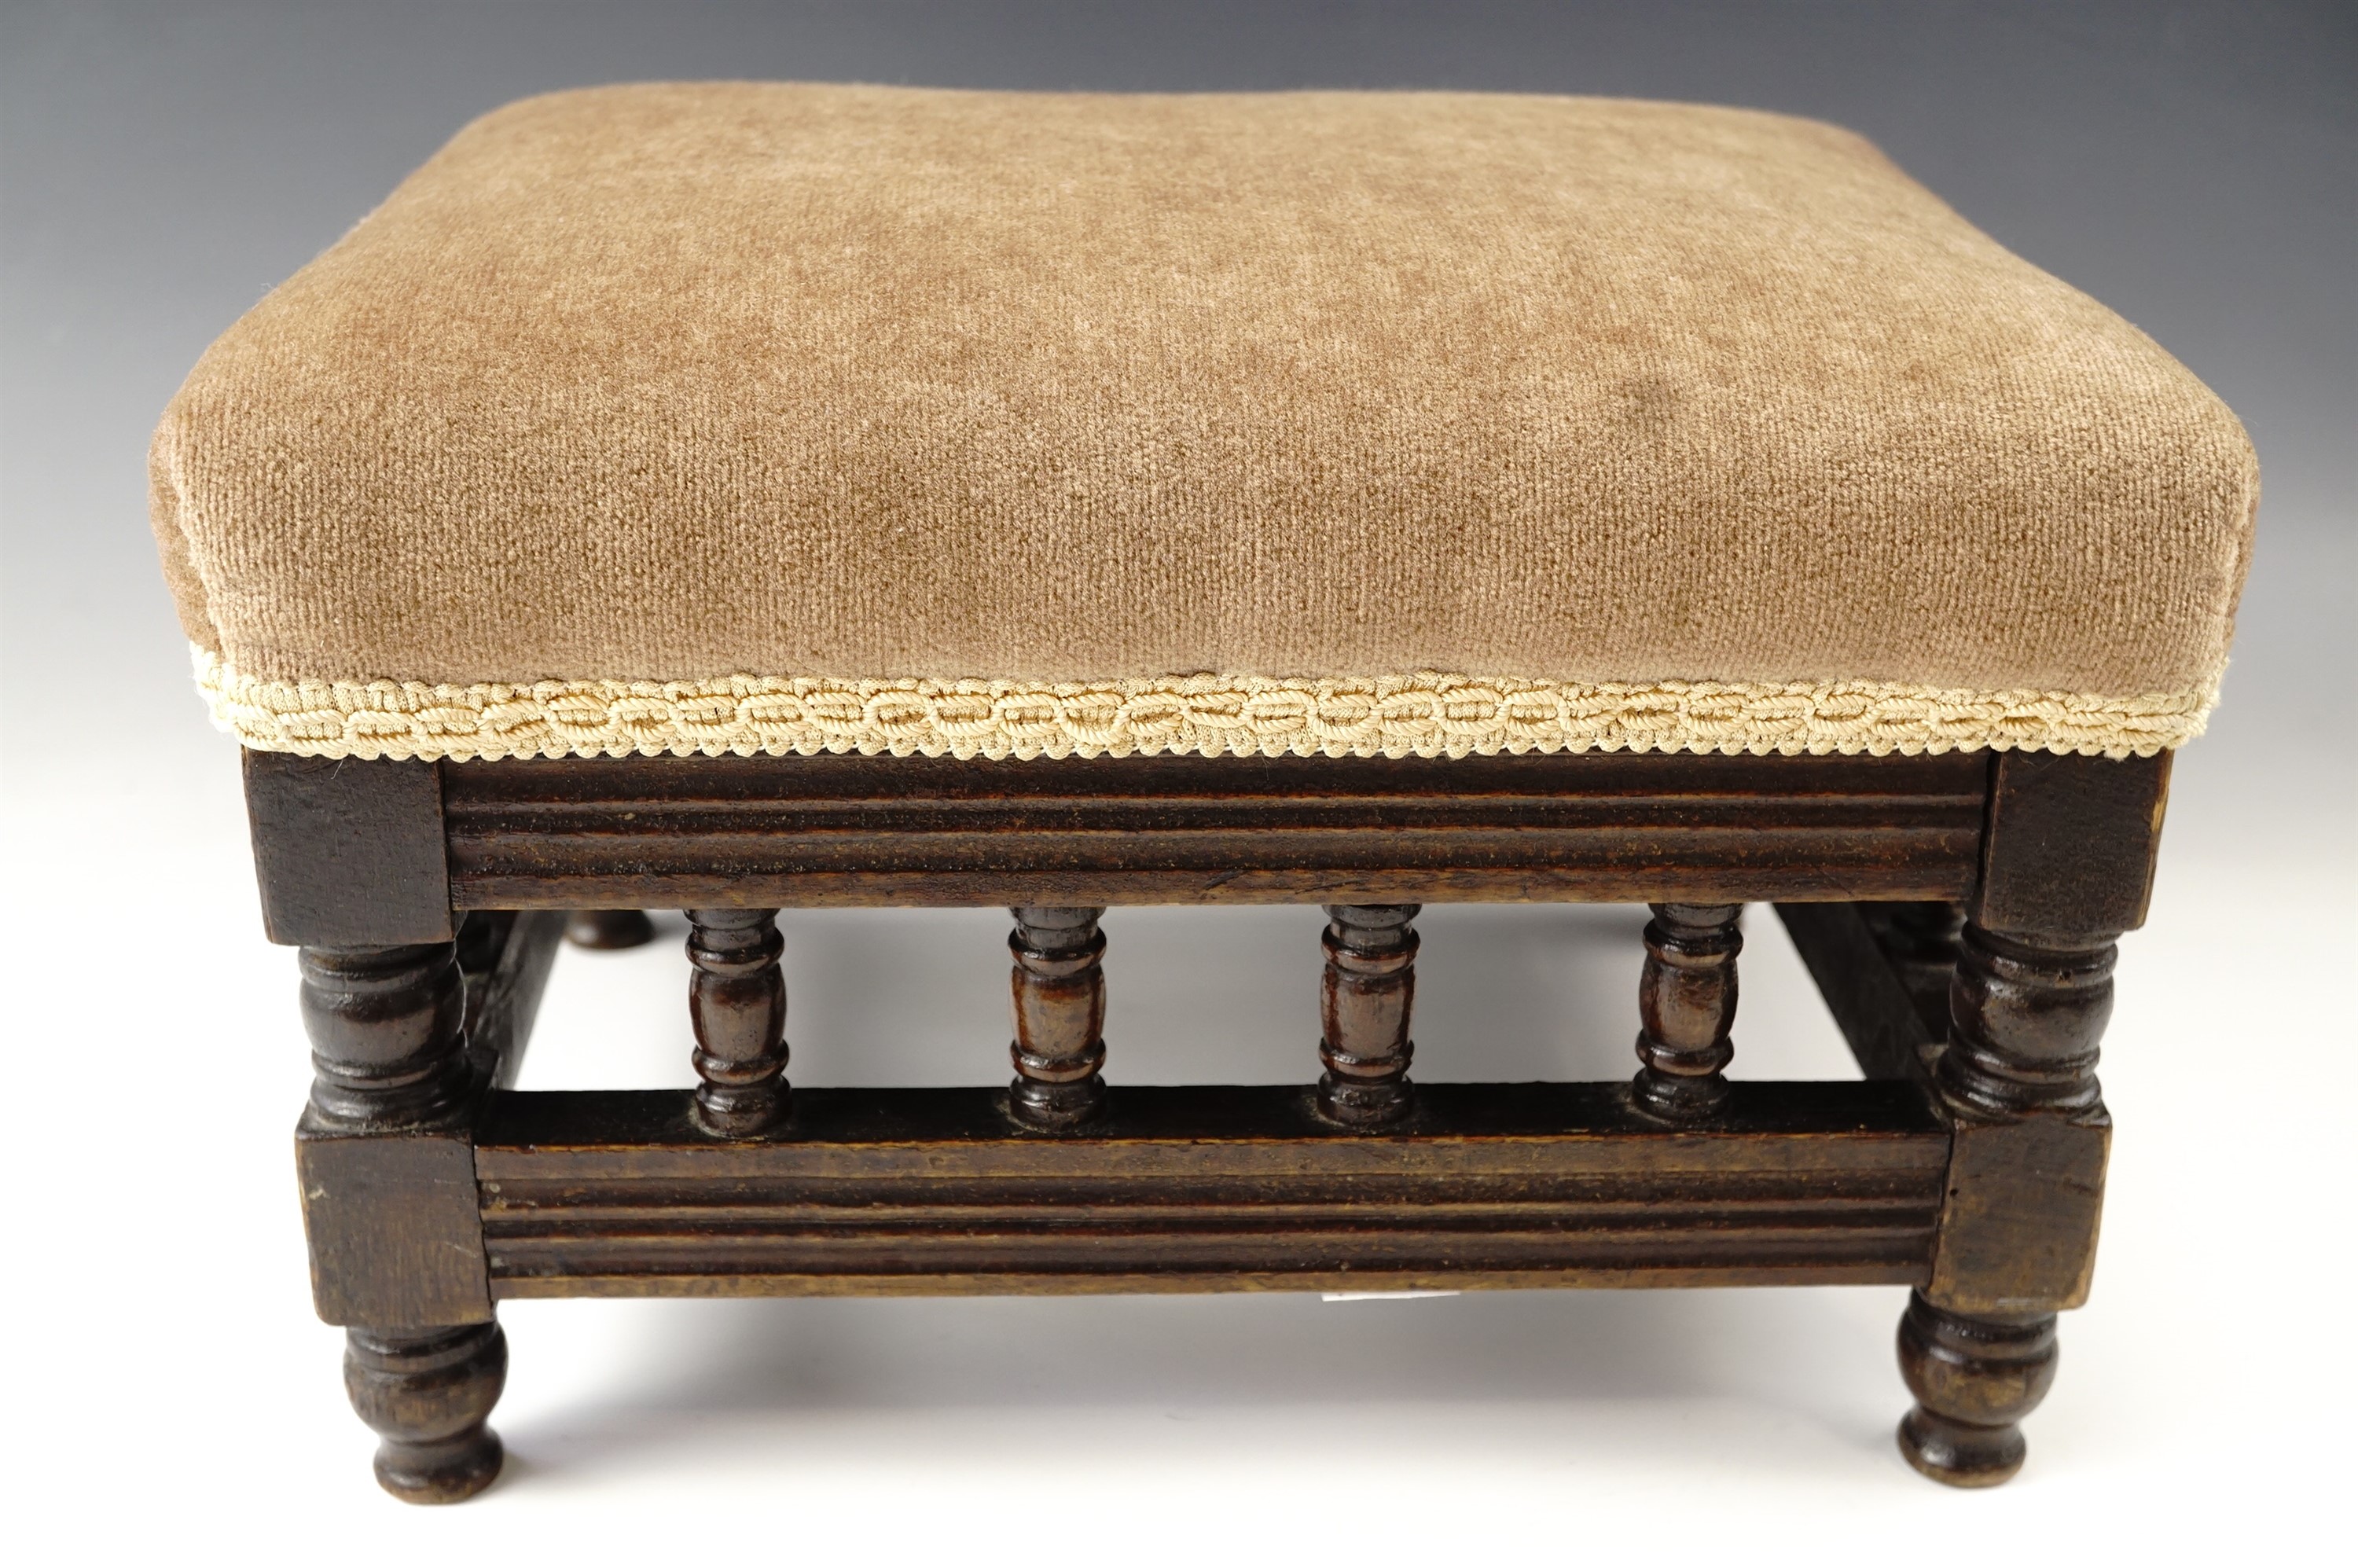 An Edwardian walnut footstool with gallery base, 30 x 27 x 20 cm